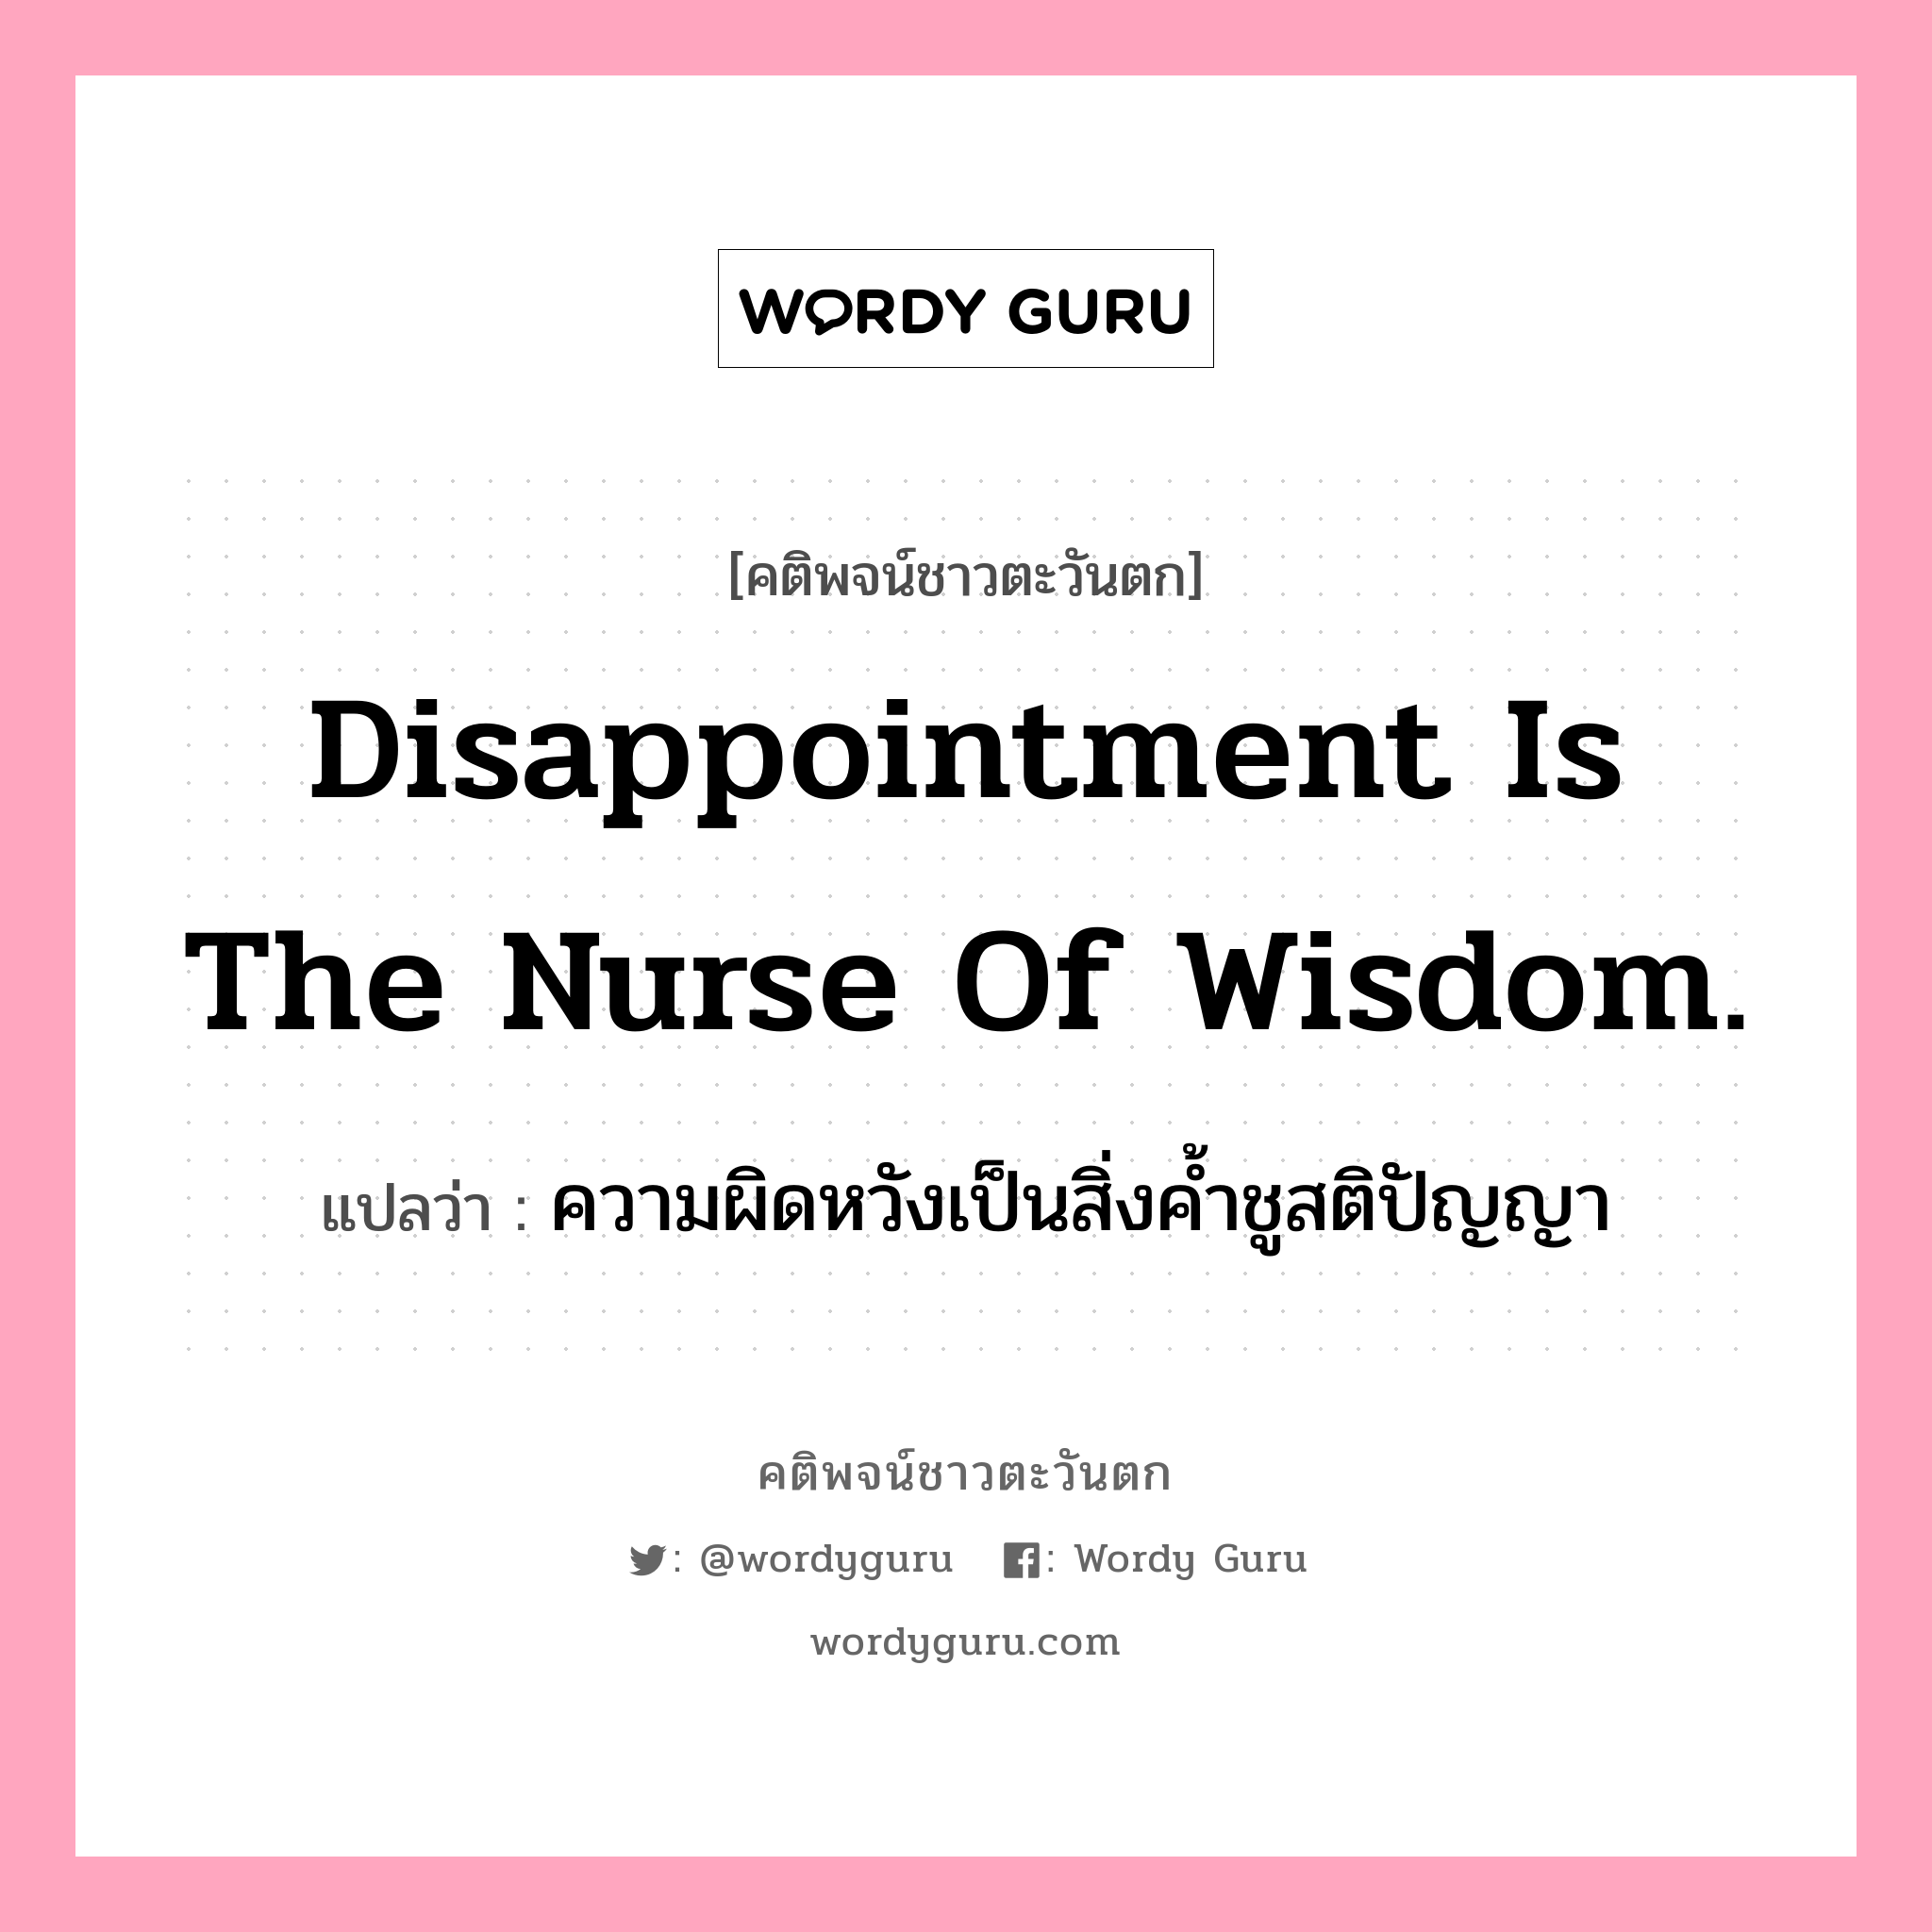 Disappointment is the nurse of wisdom., คติพจน์ชาวตะวันตก Disappointment is the nurse of wisdom. แปลว่า ความผิดหวังเป็นสิ่งค้ำชูสติปัญญา